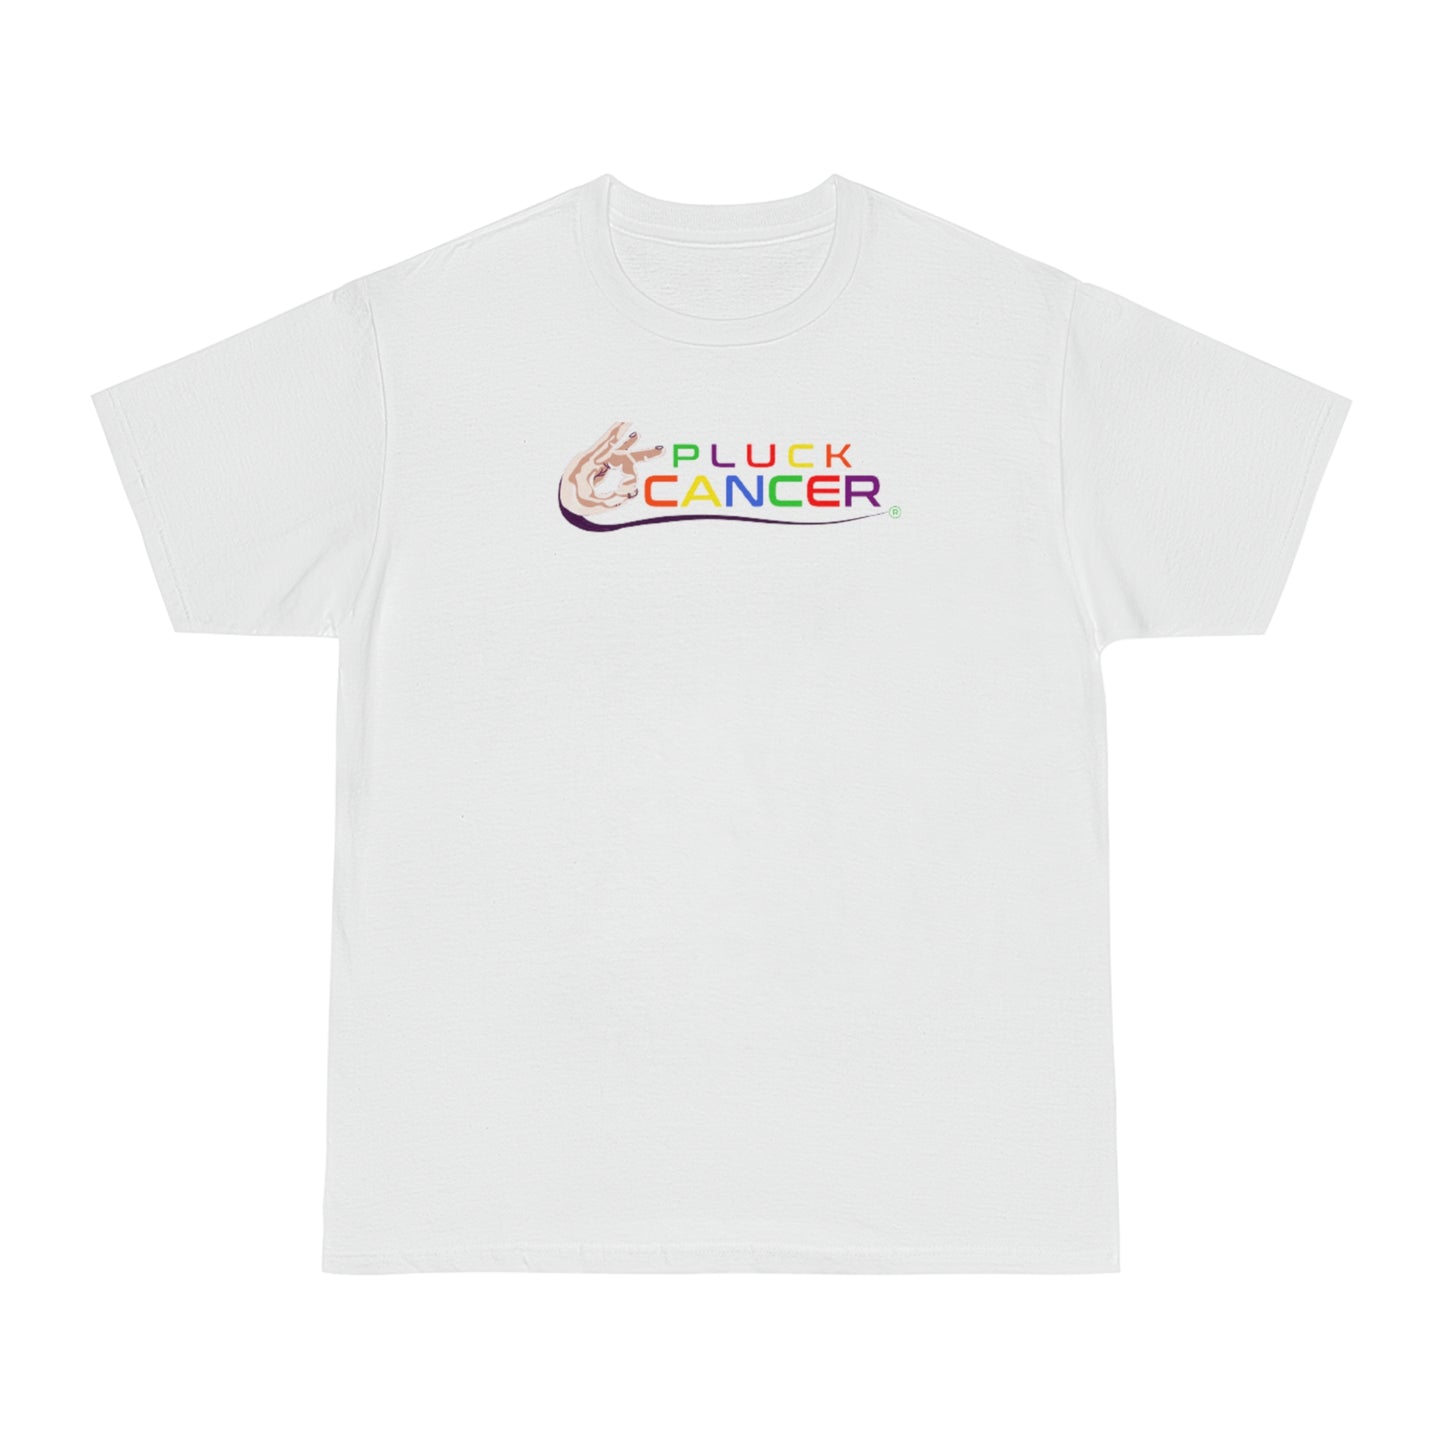 Unisex Hammer™ T-shirt